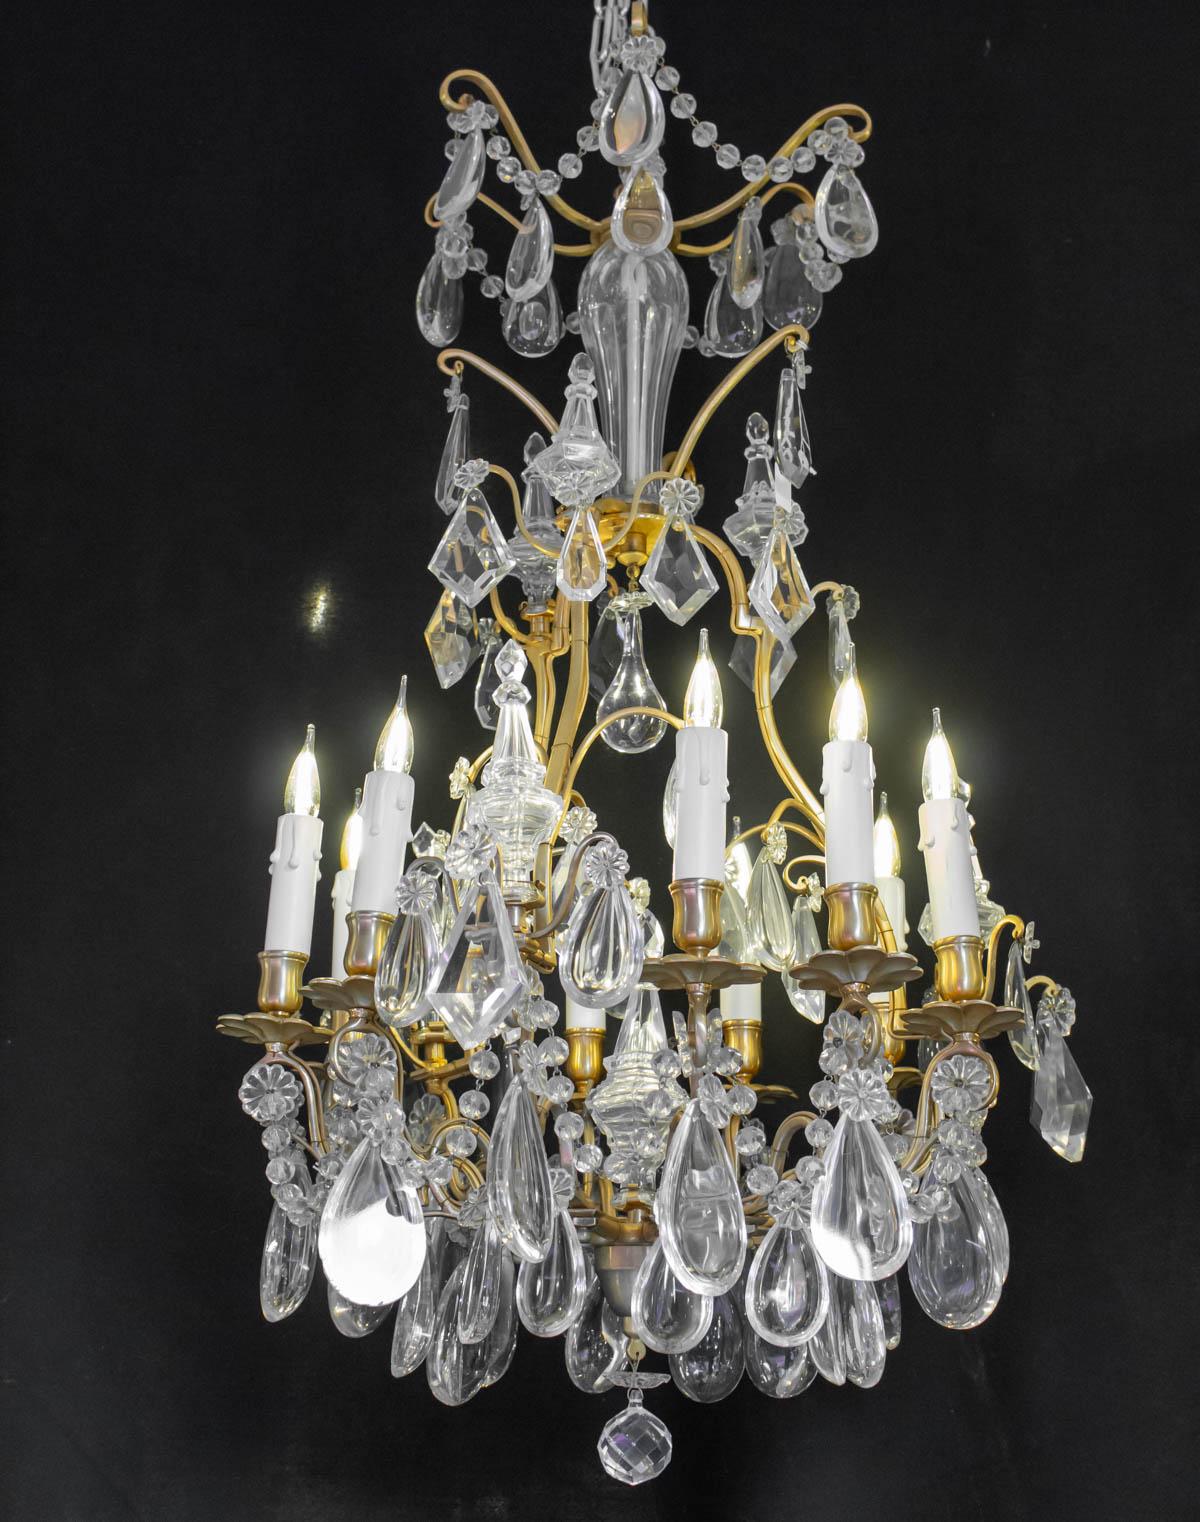 Crystal chandelier 19th century, gilt bronze, Napoleon III period, Louis XV style
Measures: H: 100cm, D: 60cm.